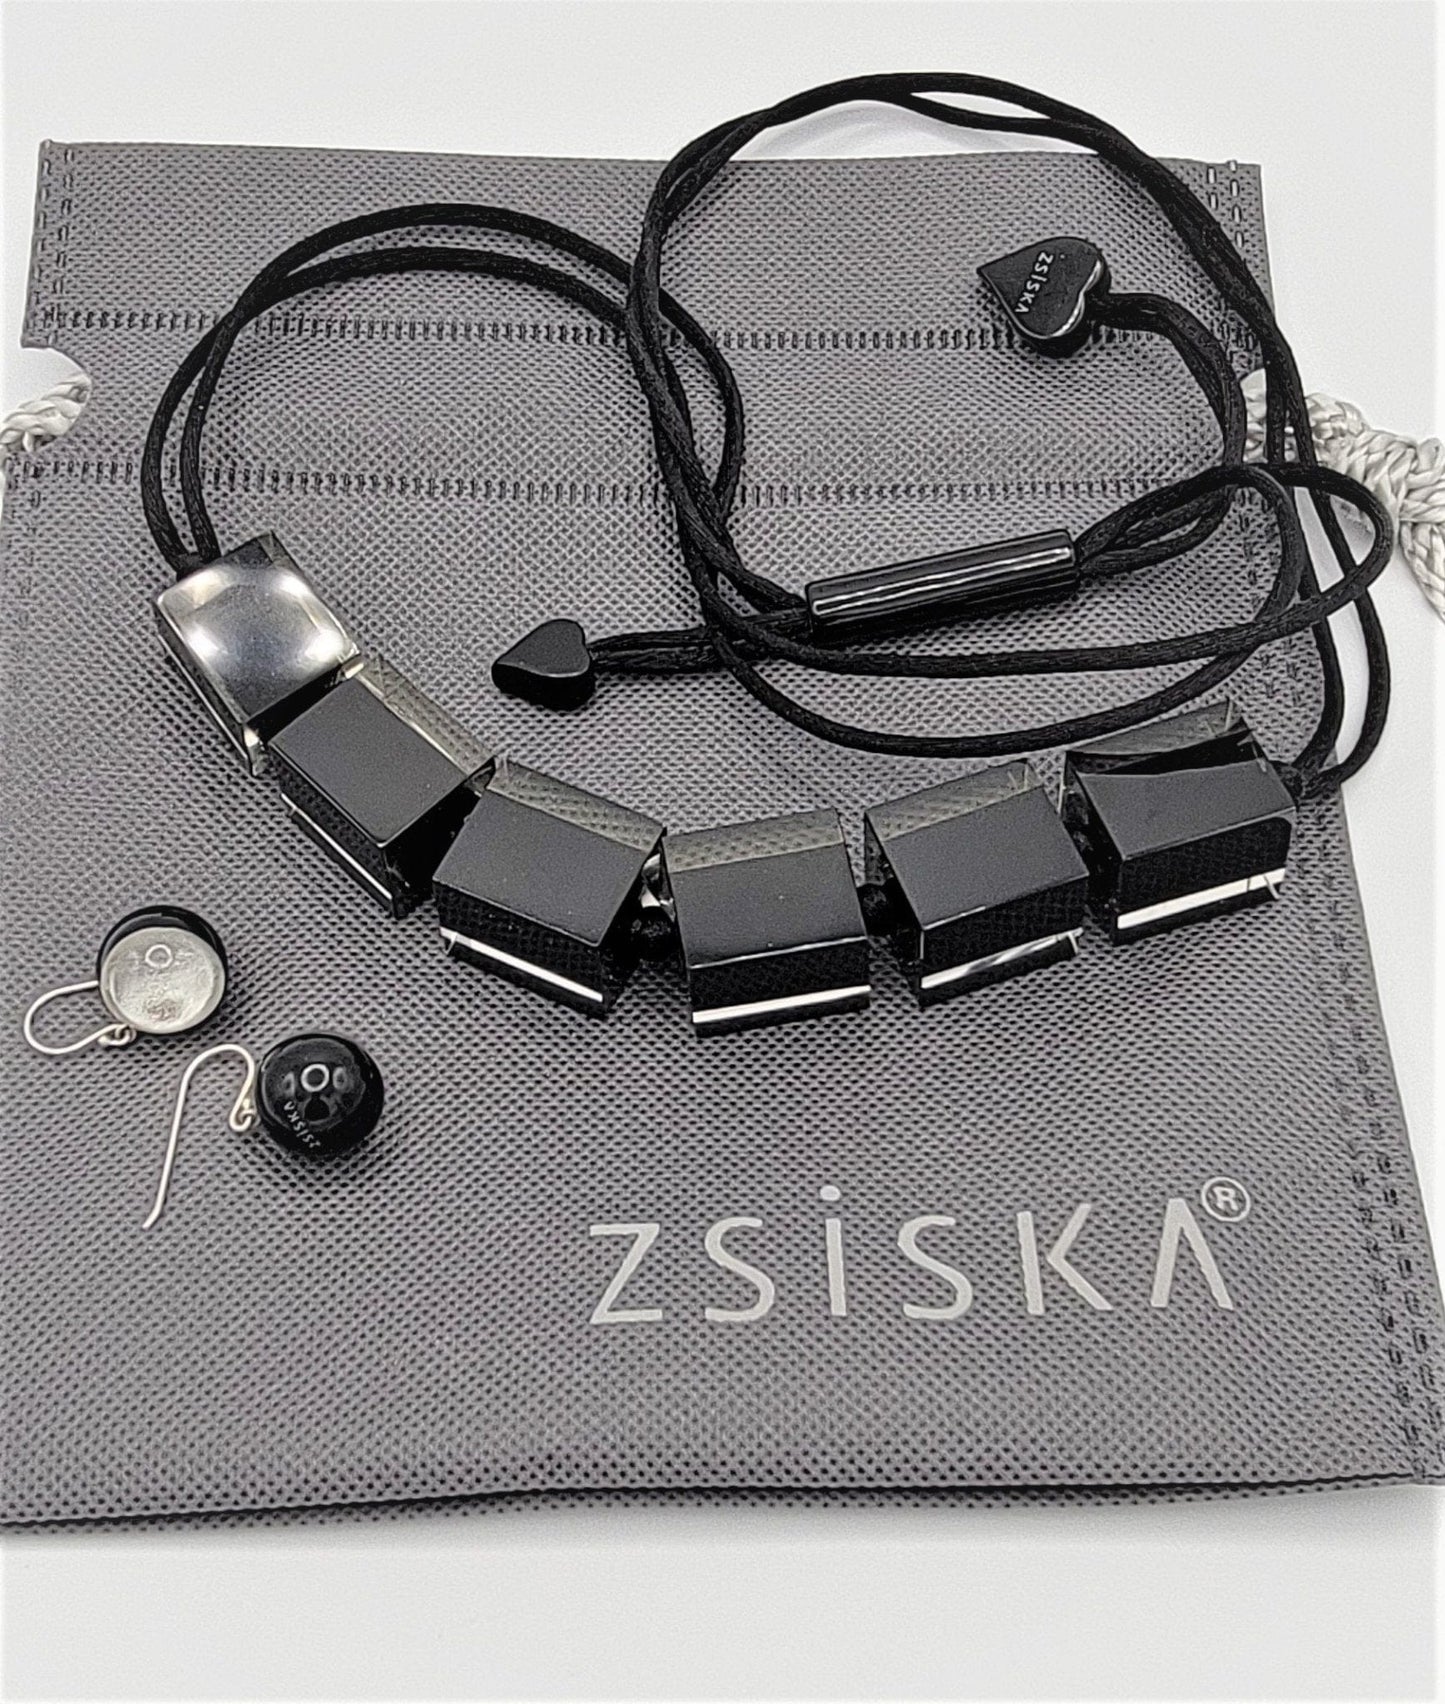 Zsiska Jewelry VTG Zsiska Amsterdam Square Blocks Lucite Runway Necklace Earrings Set w/Bag